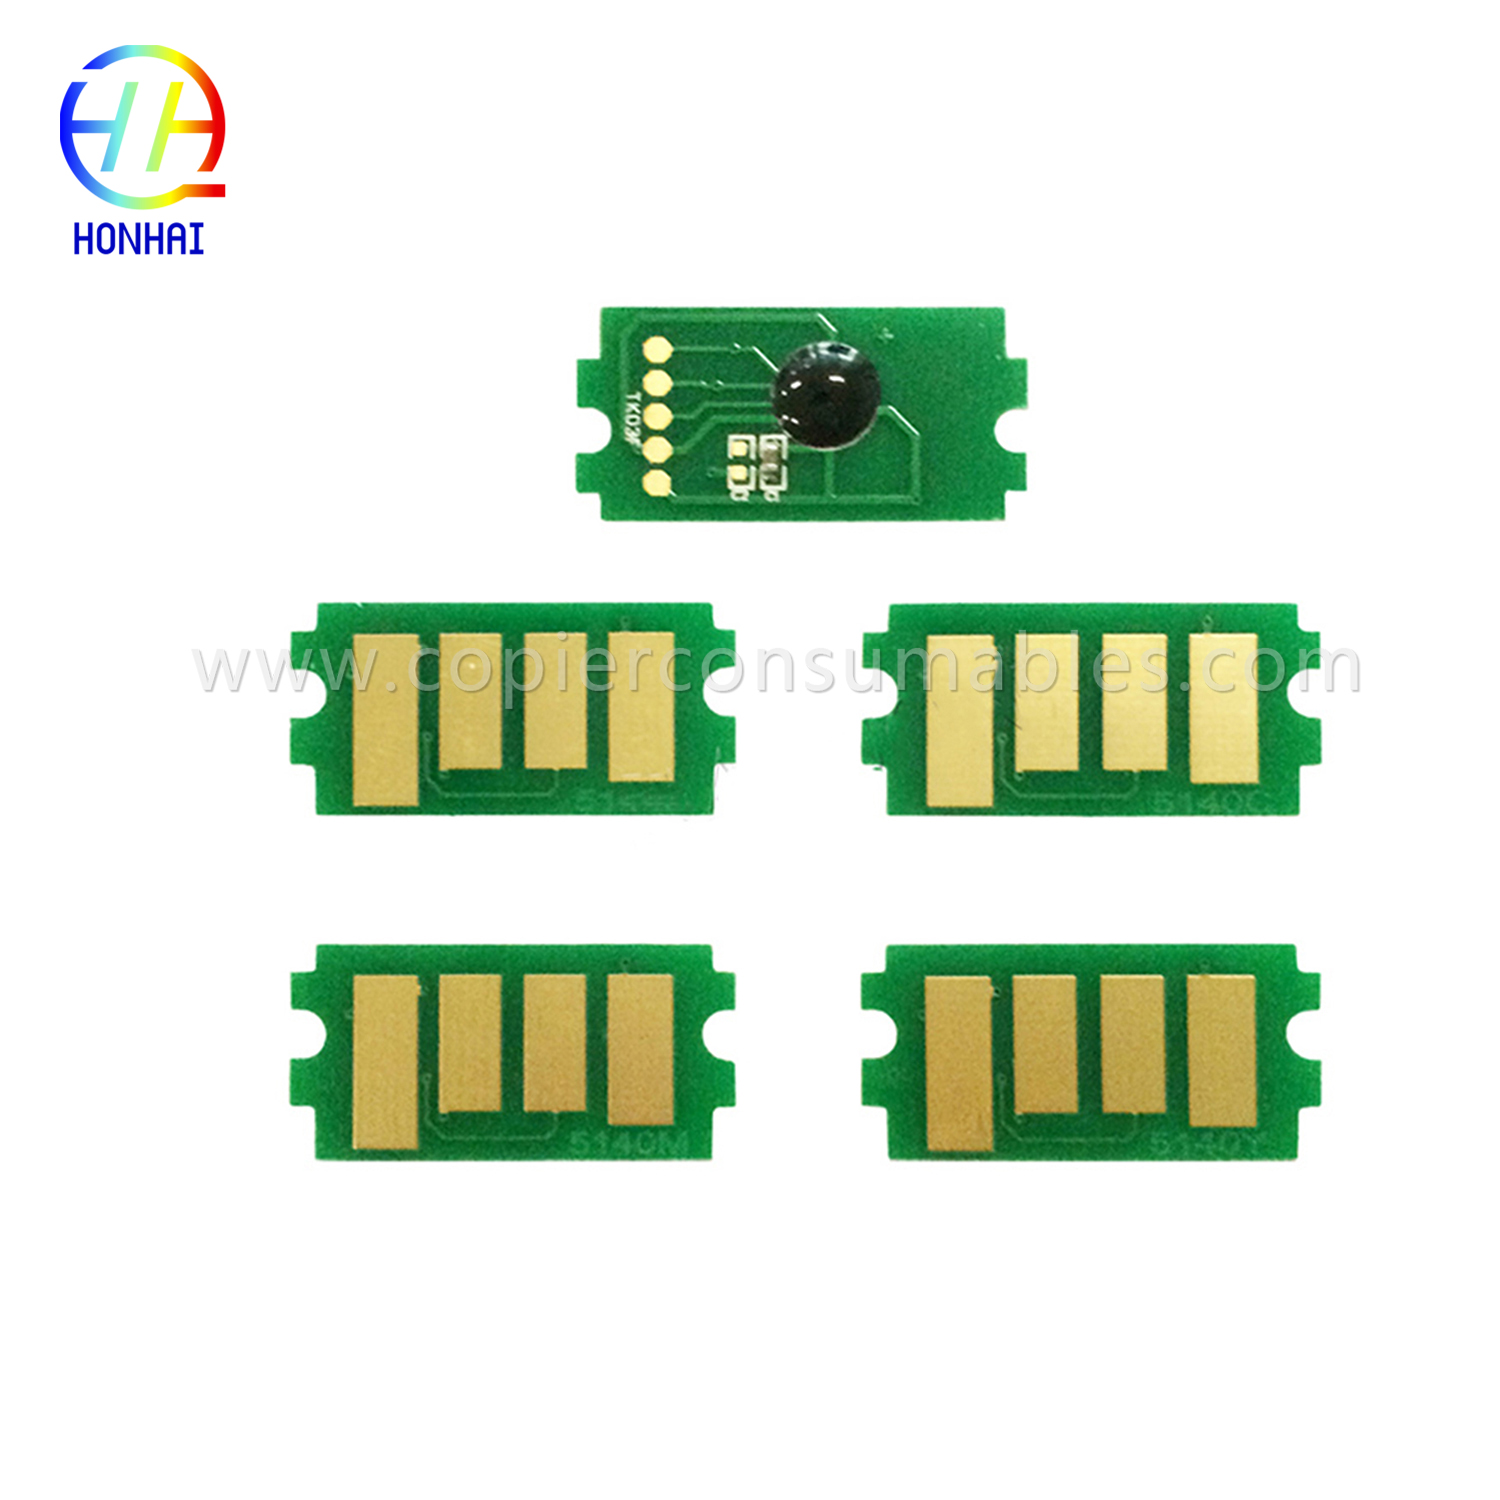 Toner Cartridge Chip for Kyocera Ecosys M6030cdn M6530cdn P6130cdn P6530cdn (TK-5140) 拷贝